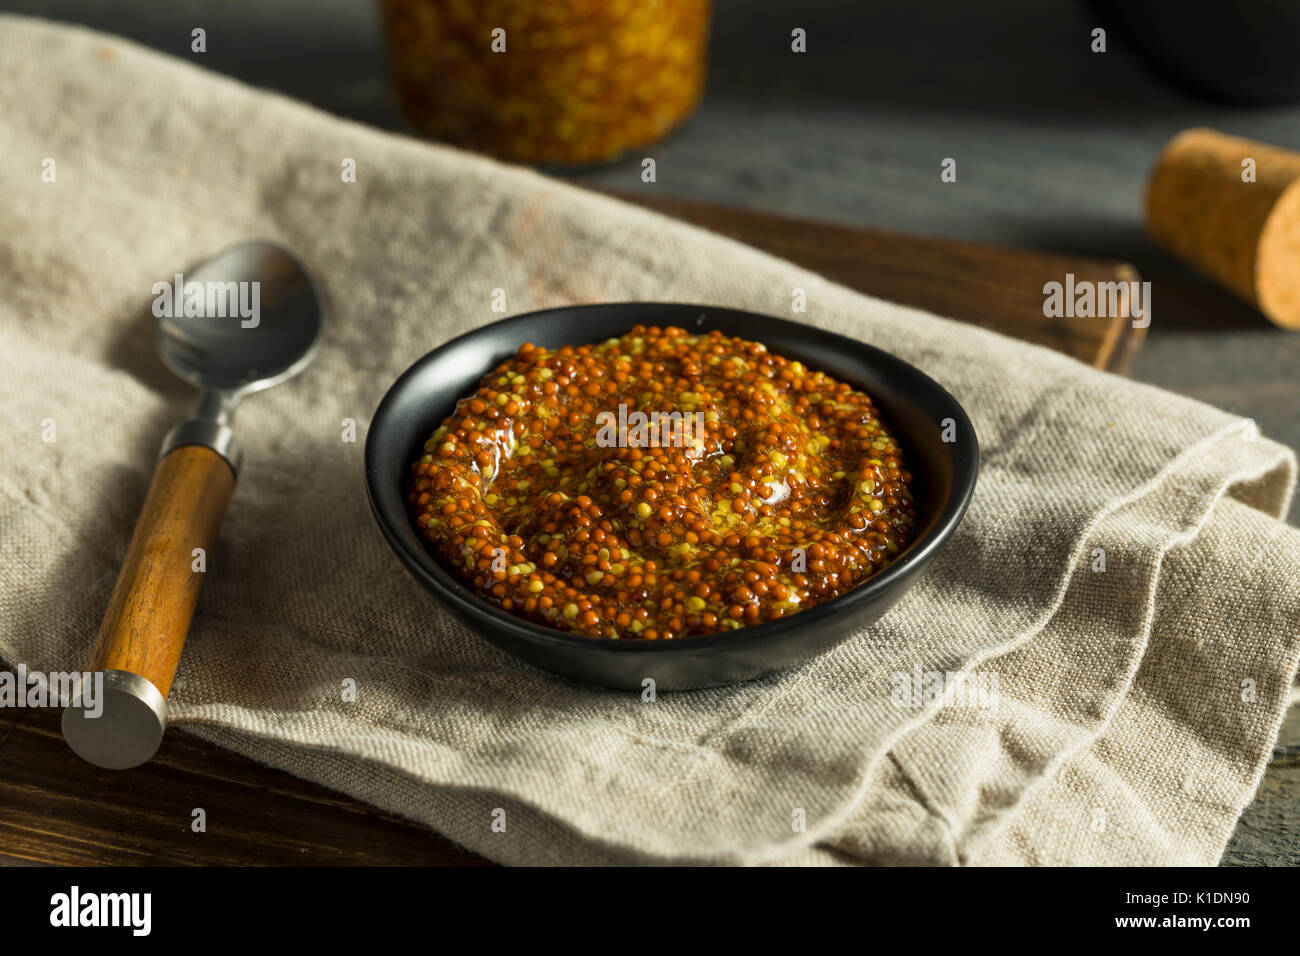 Homemade Organic Fancy Dijon Mustard in a Bowl Stock Photo